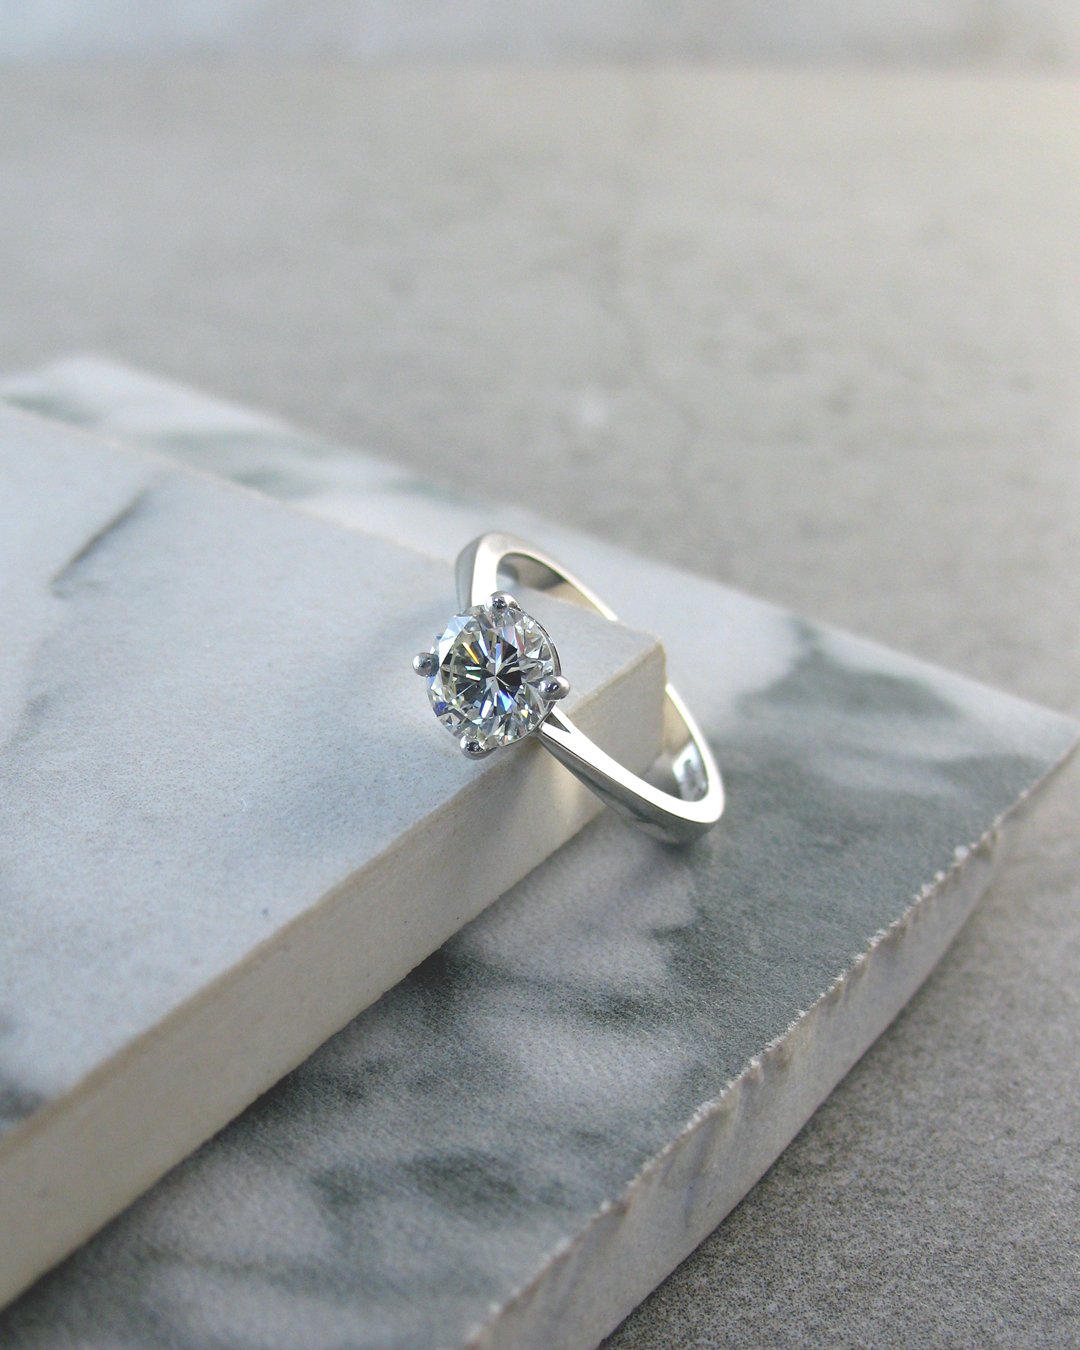 A classic platinum solitaire diamond engagement ring